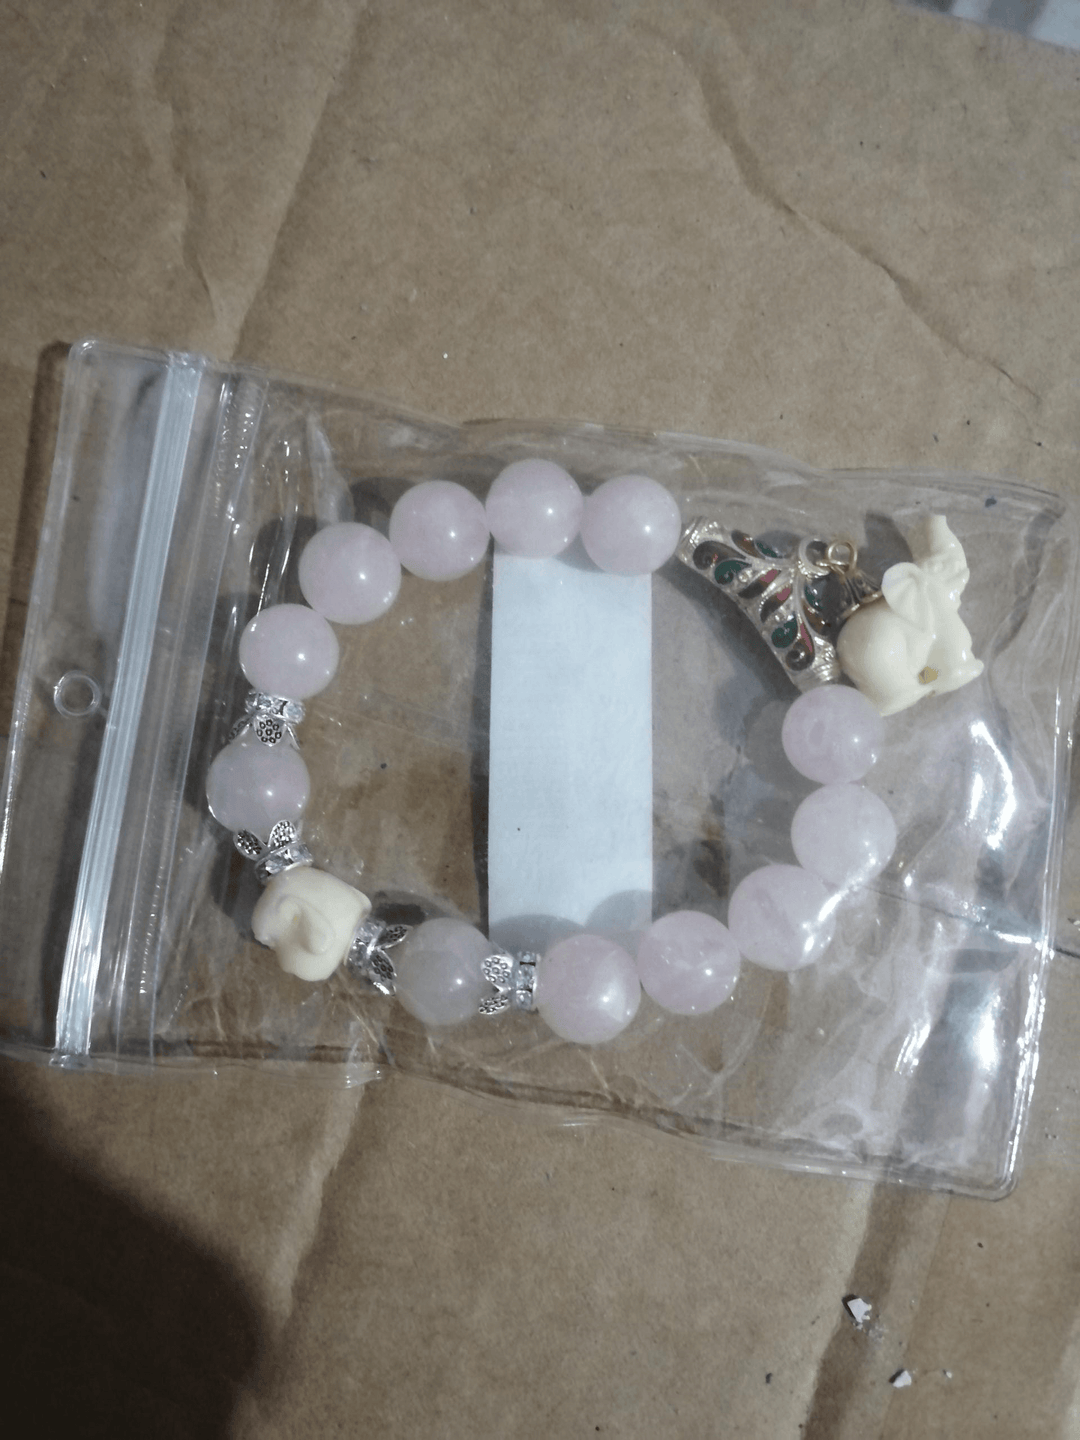 Crystal Elephant Charm Bracelet bead Cultural Bracelet Jewelry - MRSLM